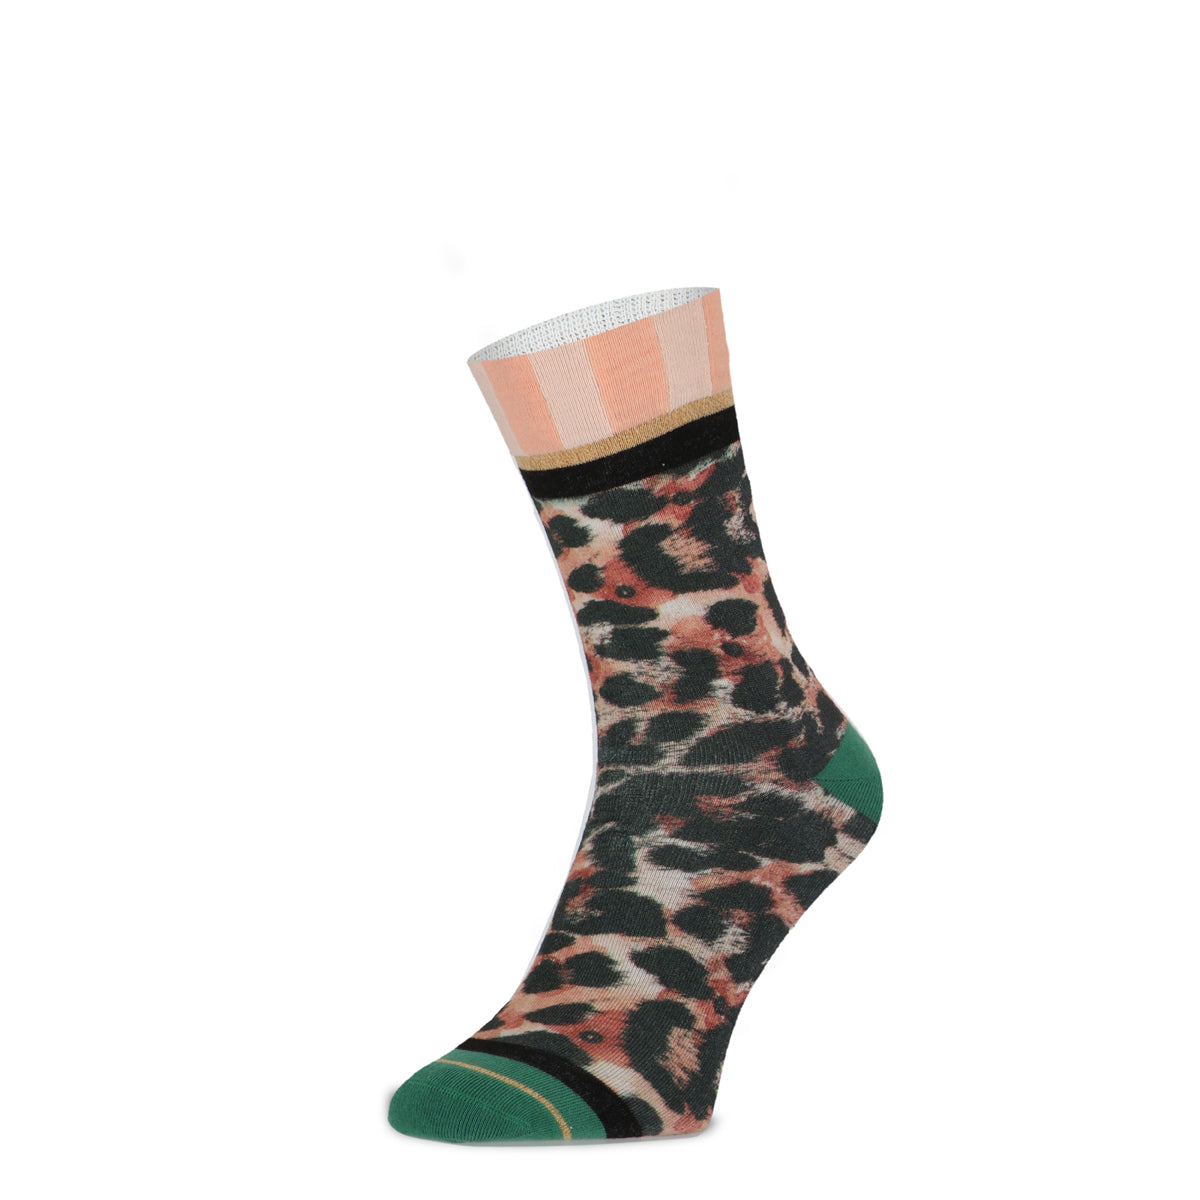 Rachel Bamboo women's socks